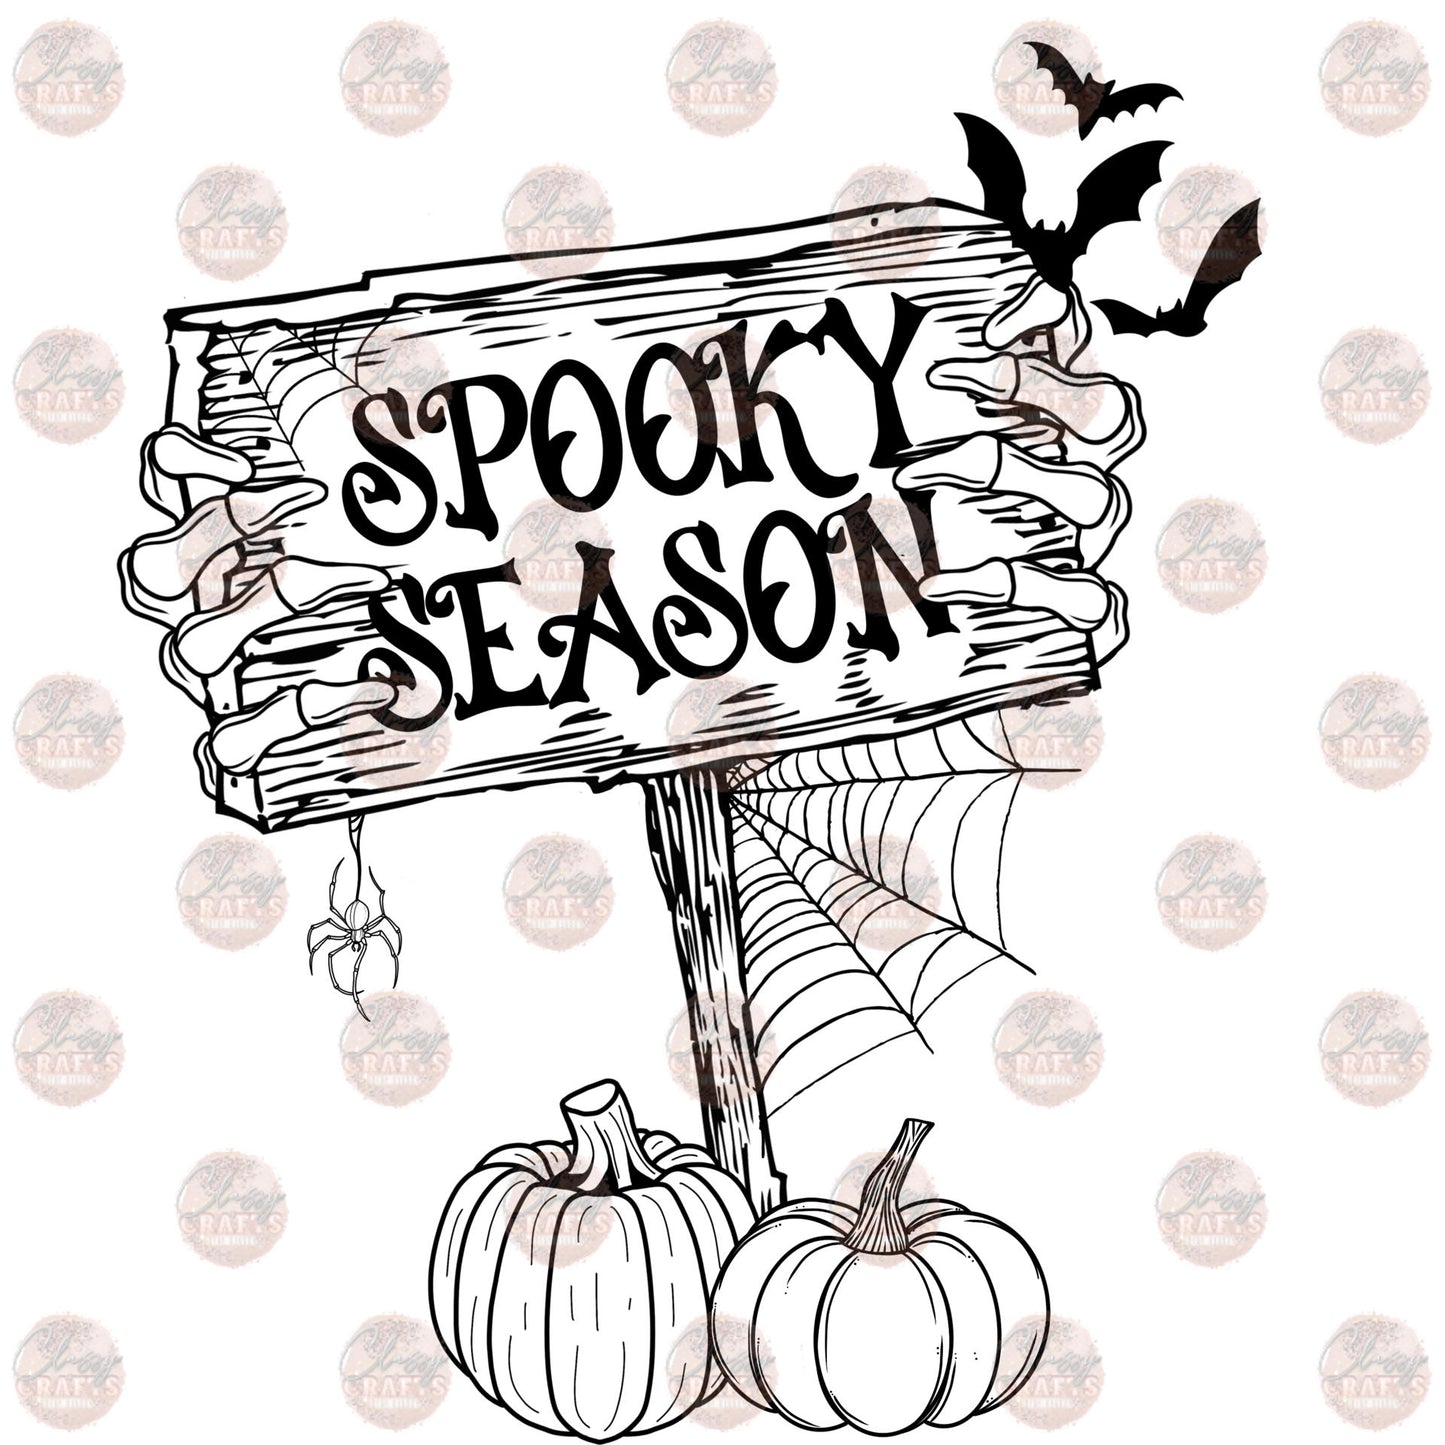 Spooky Season Sign B&W - Sublimation Transfer